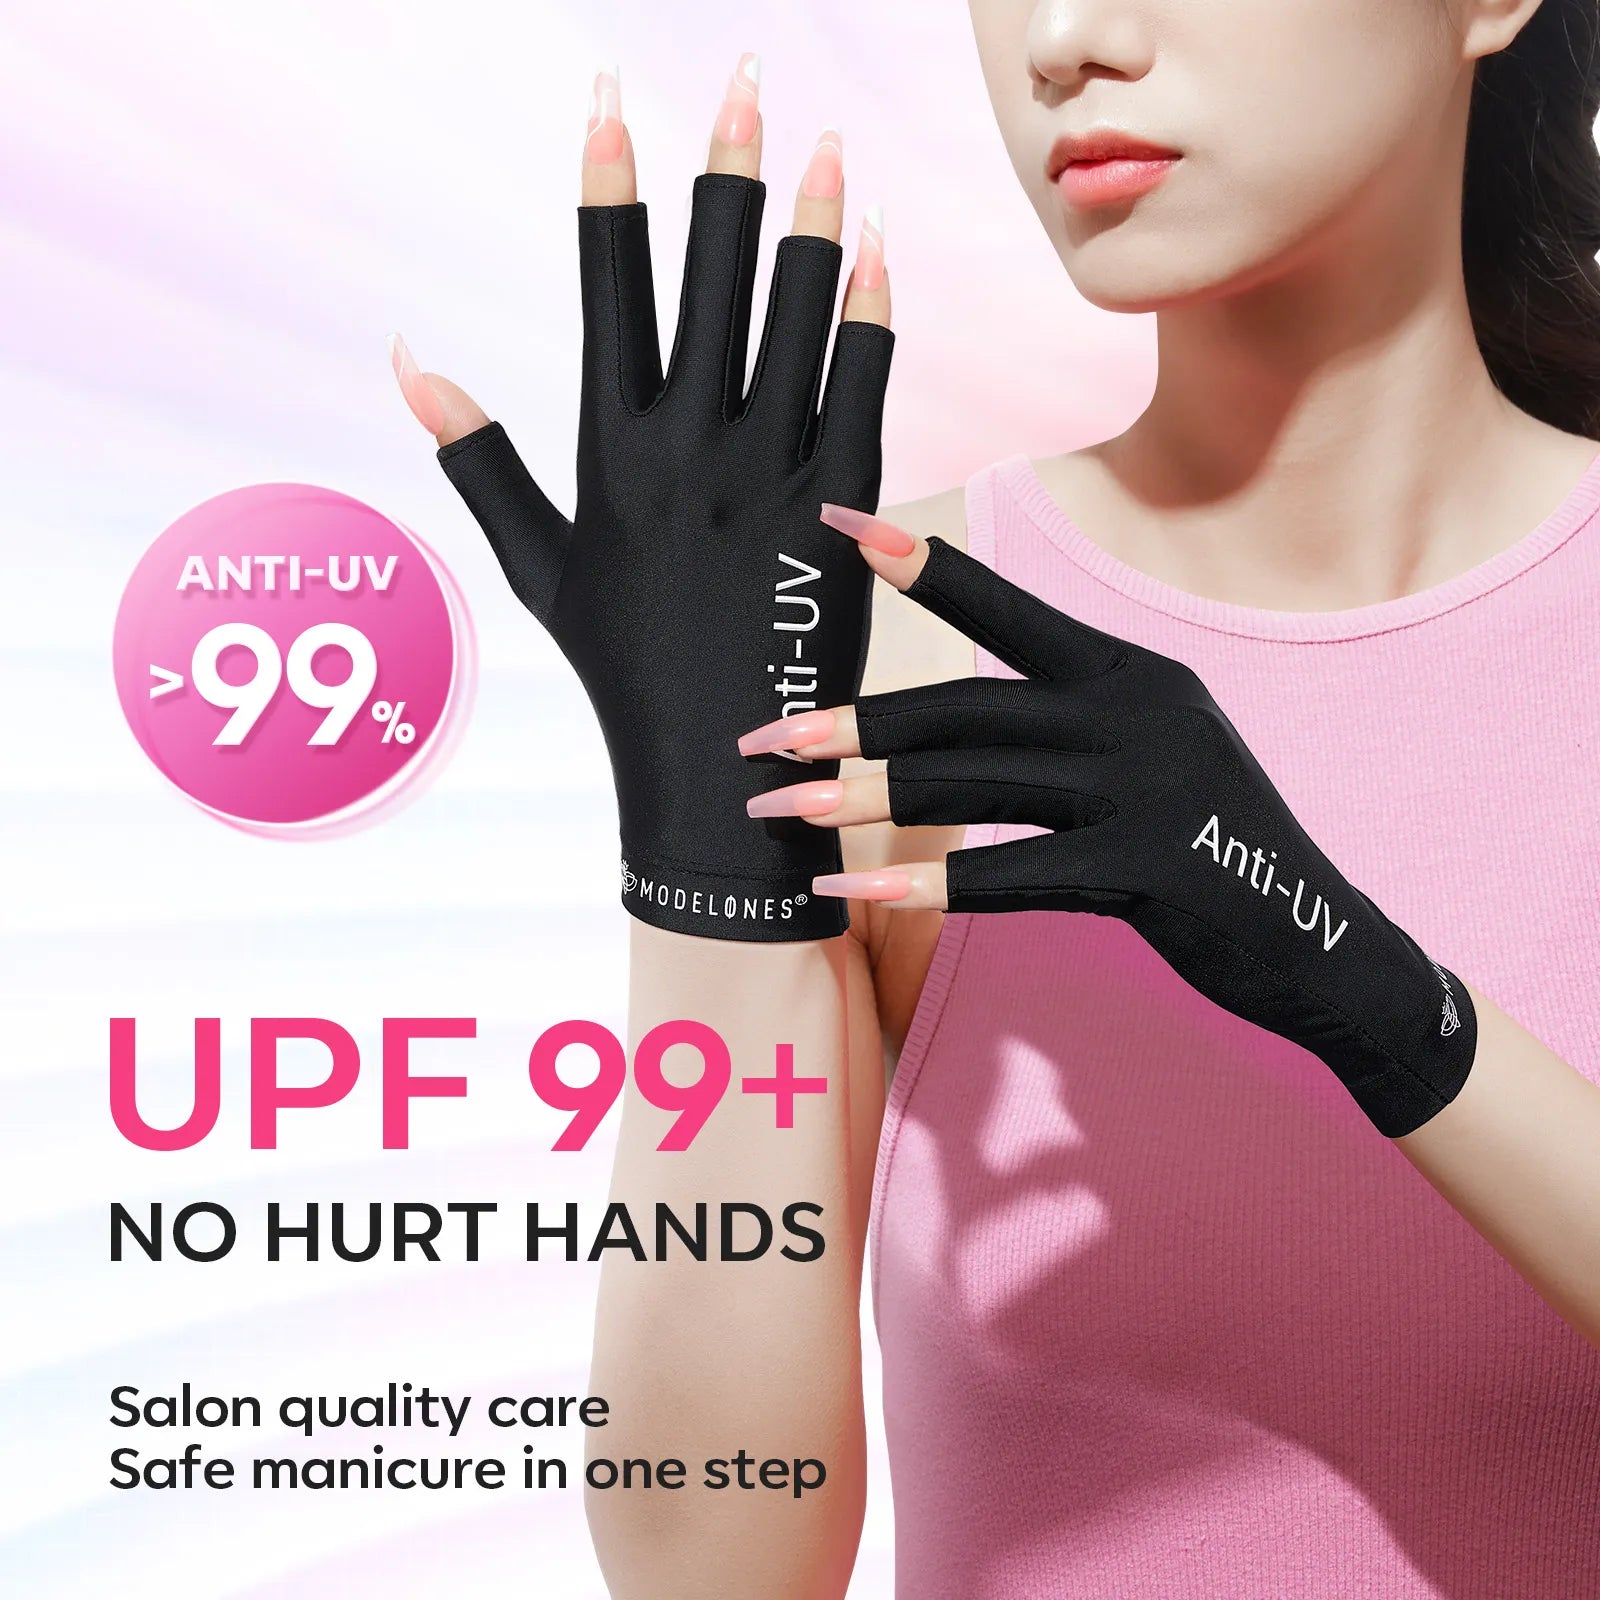 Anti-UV light Glove With 48W Nail Lamp For Nails  Salon Professional UPF 99+